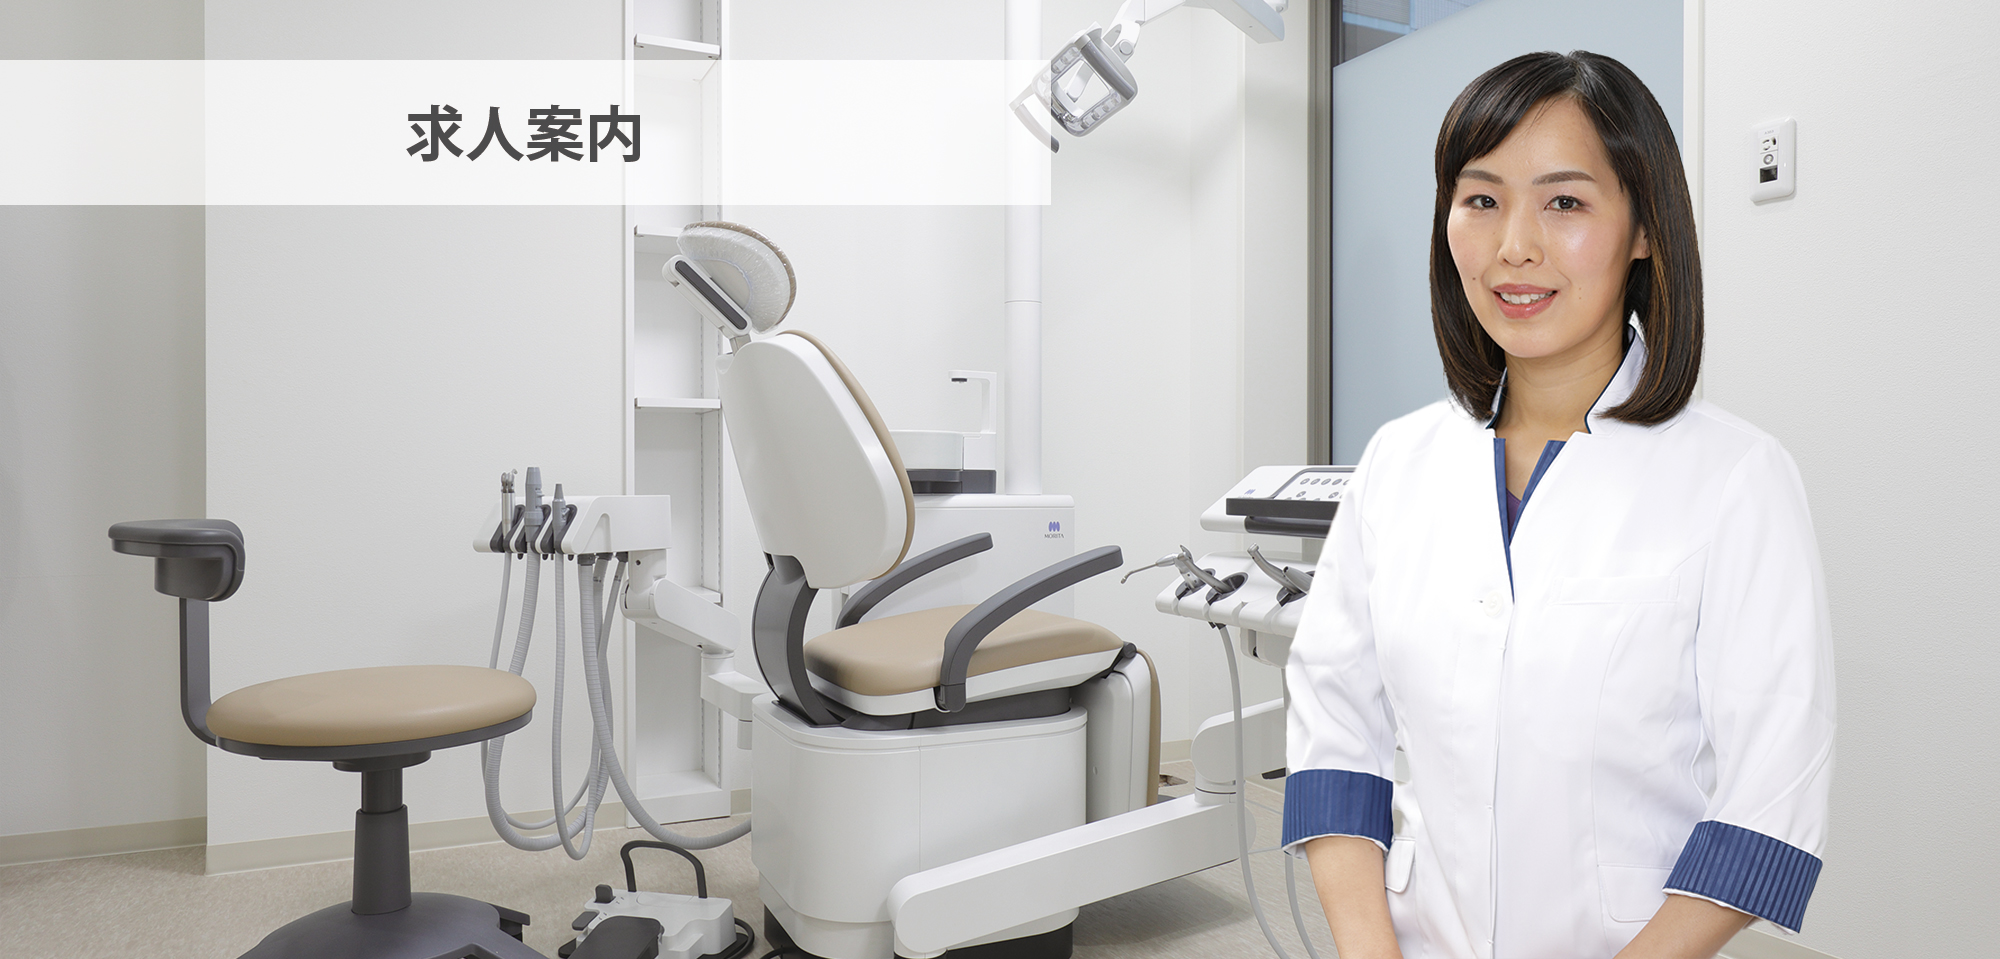 Reina歯科医院の求人紹介のTOP画像